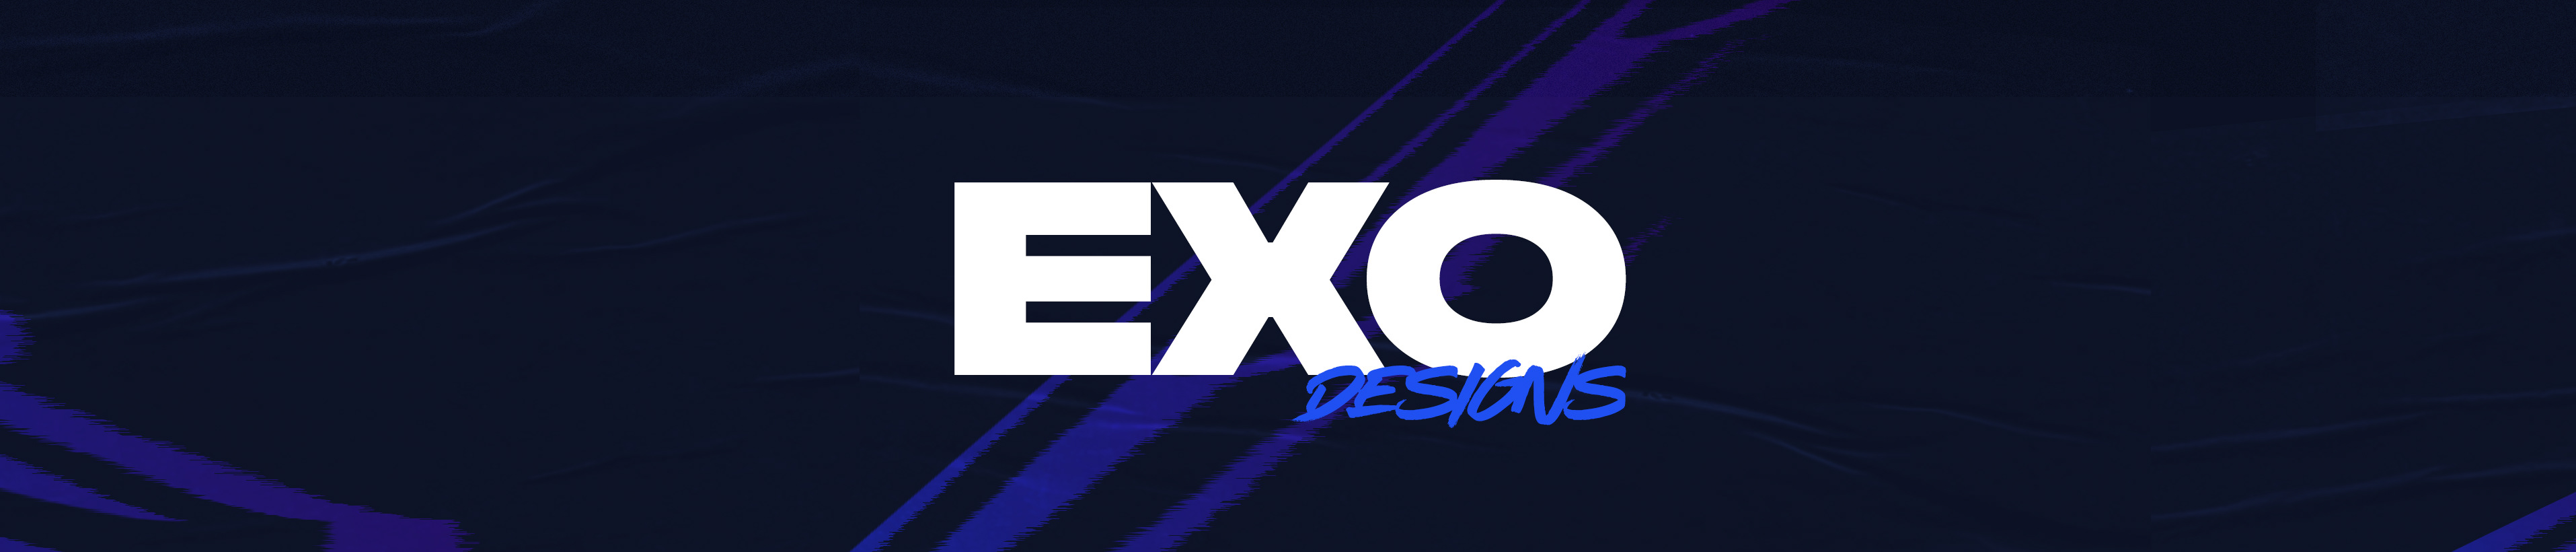 Banner profilu uživatele Exo Designs